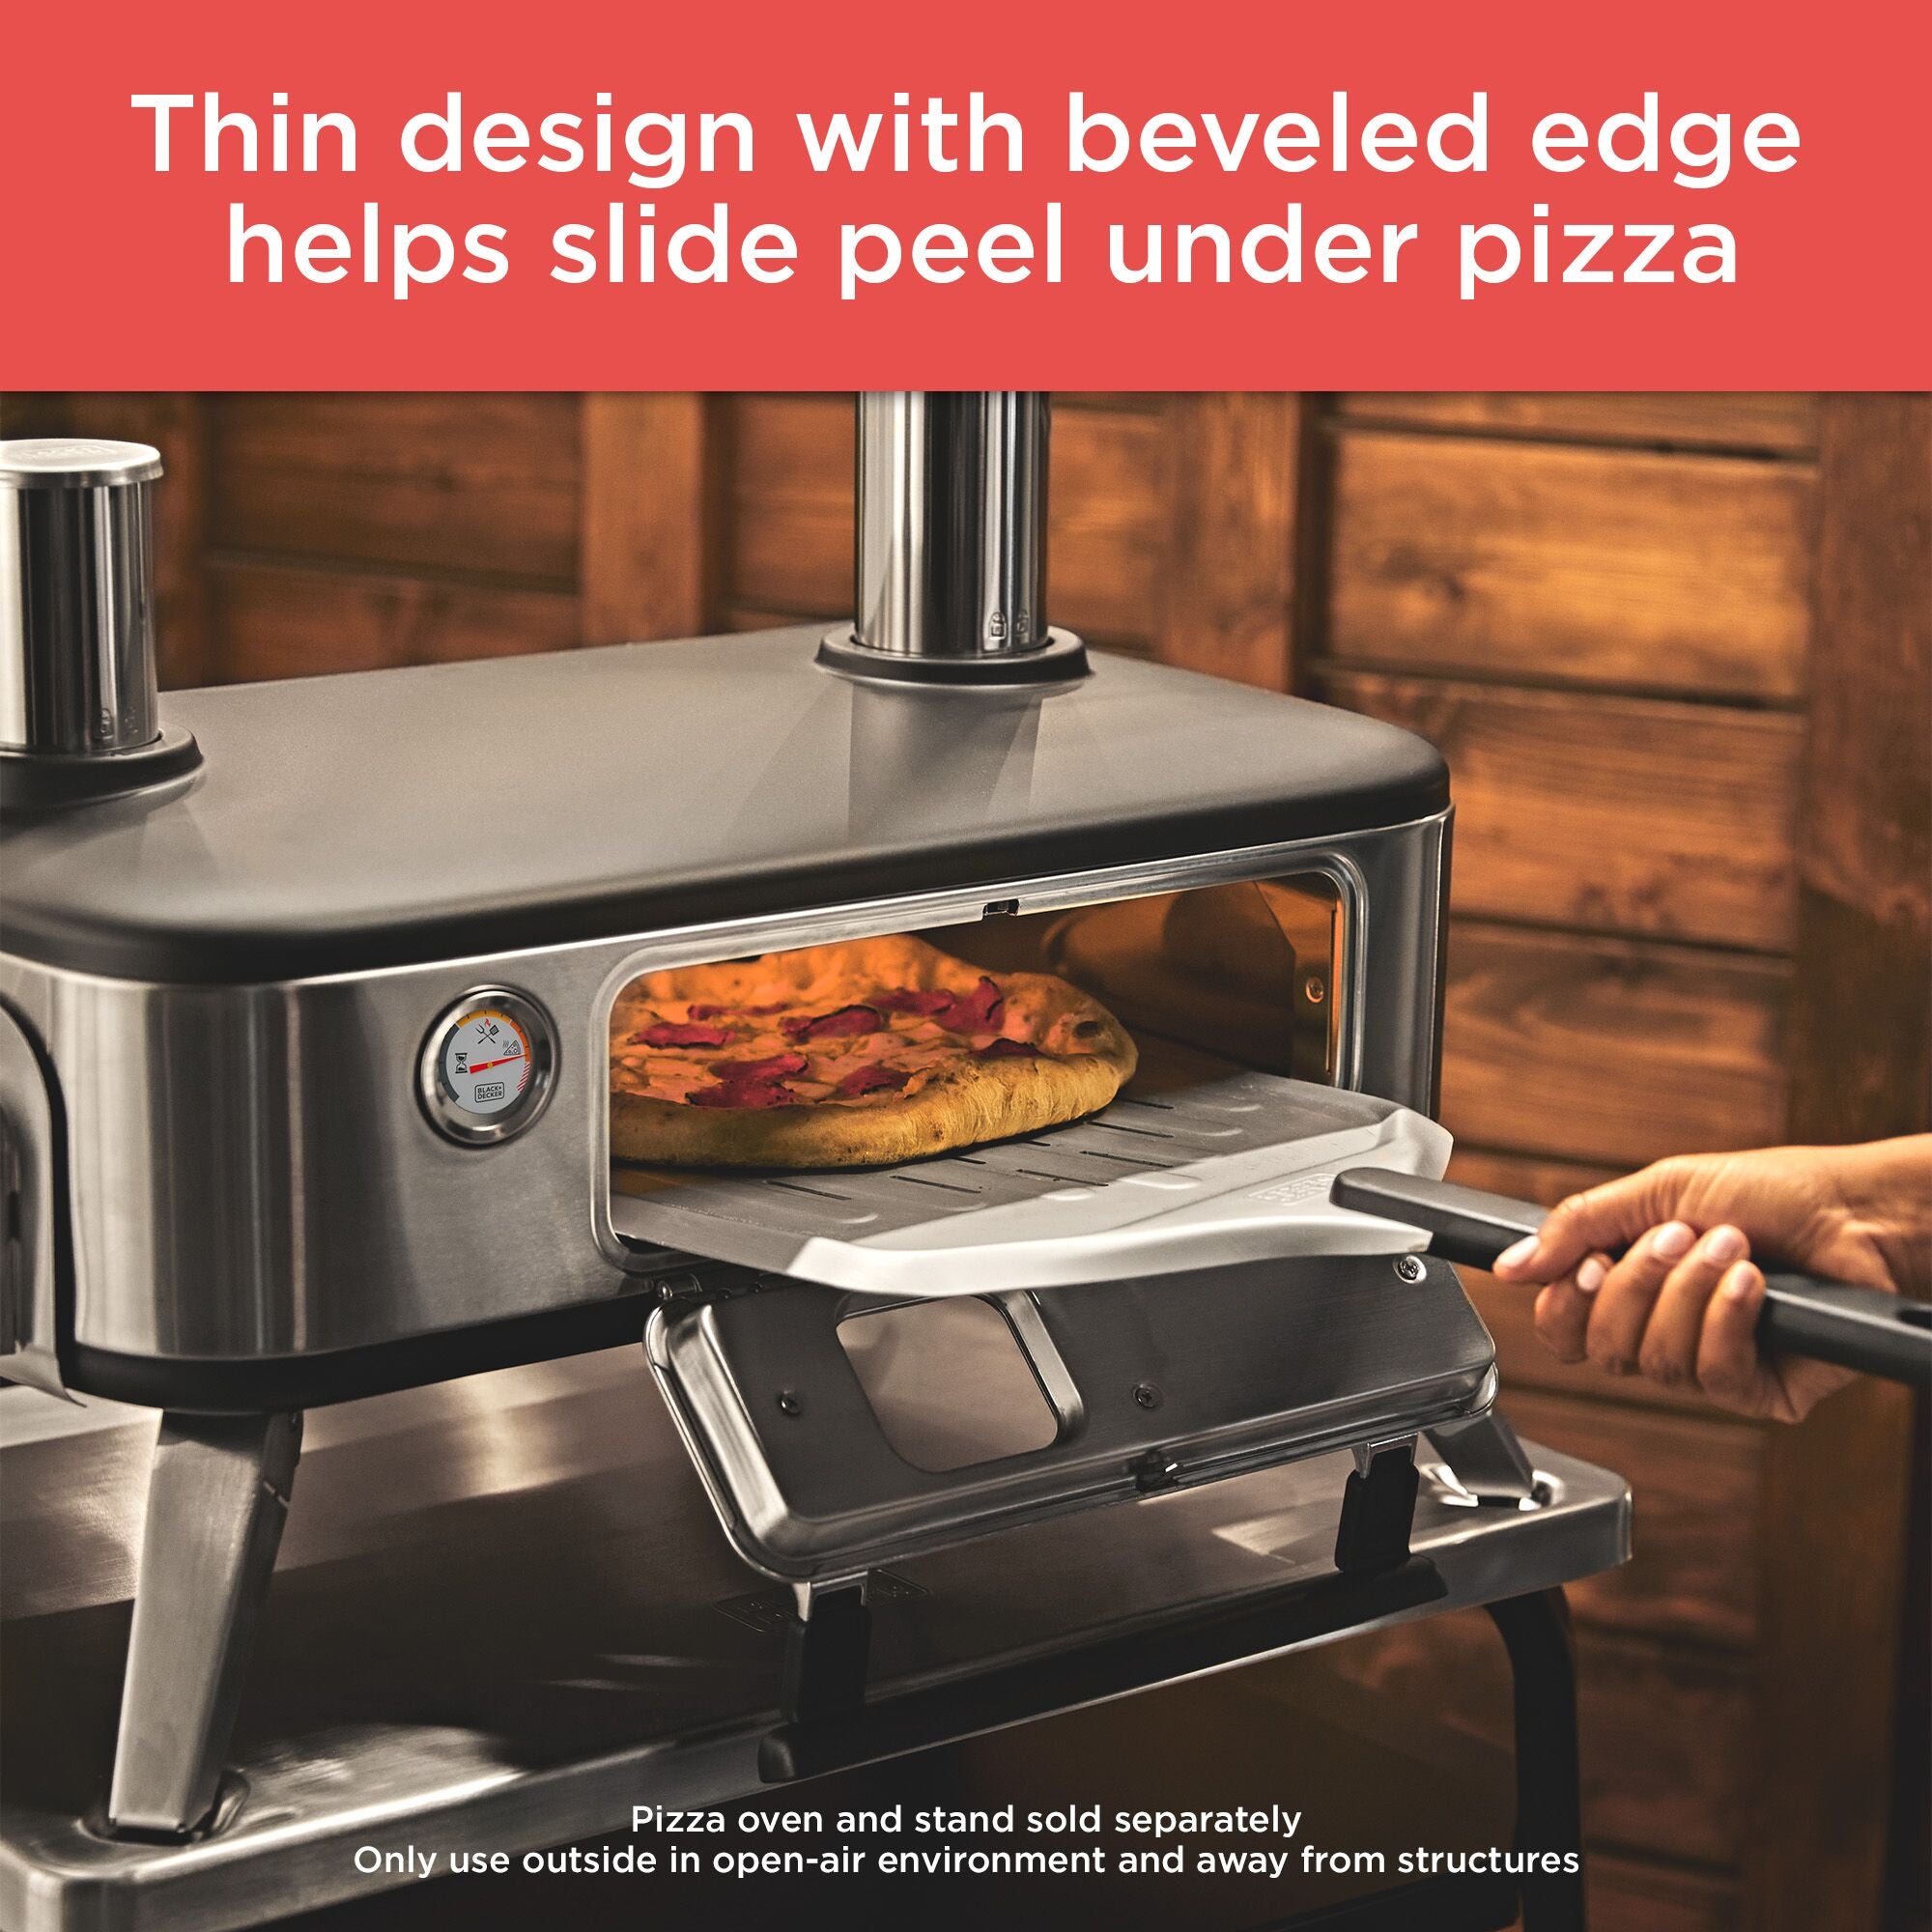 Thin design with bevele edge helps slide peel under pizza